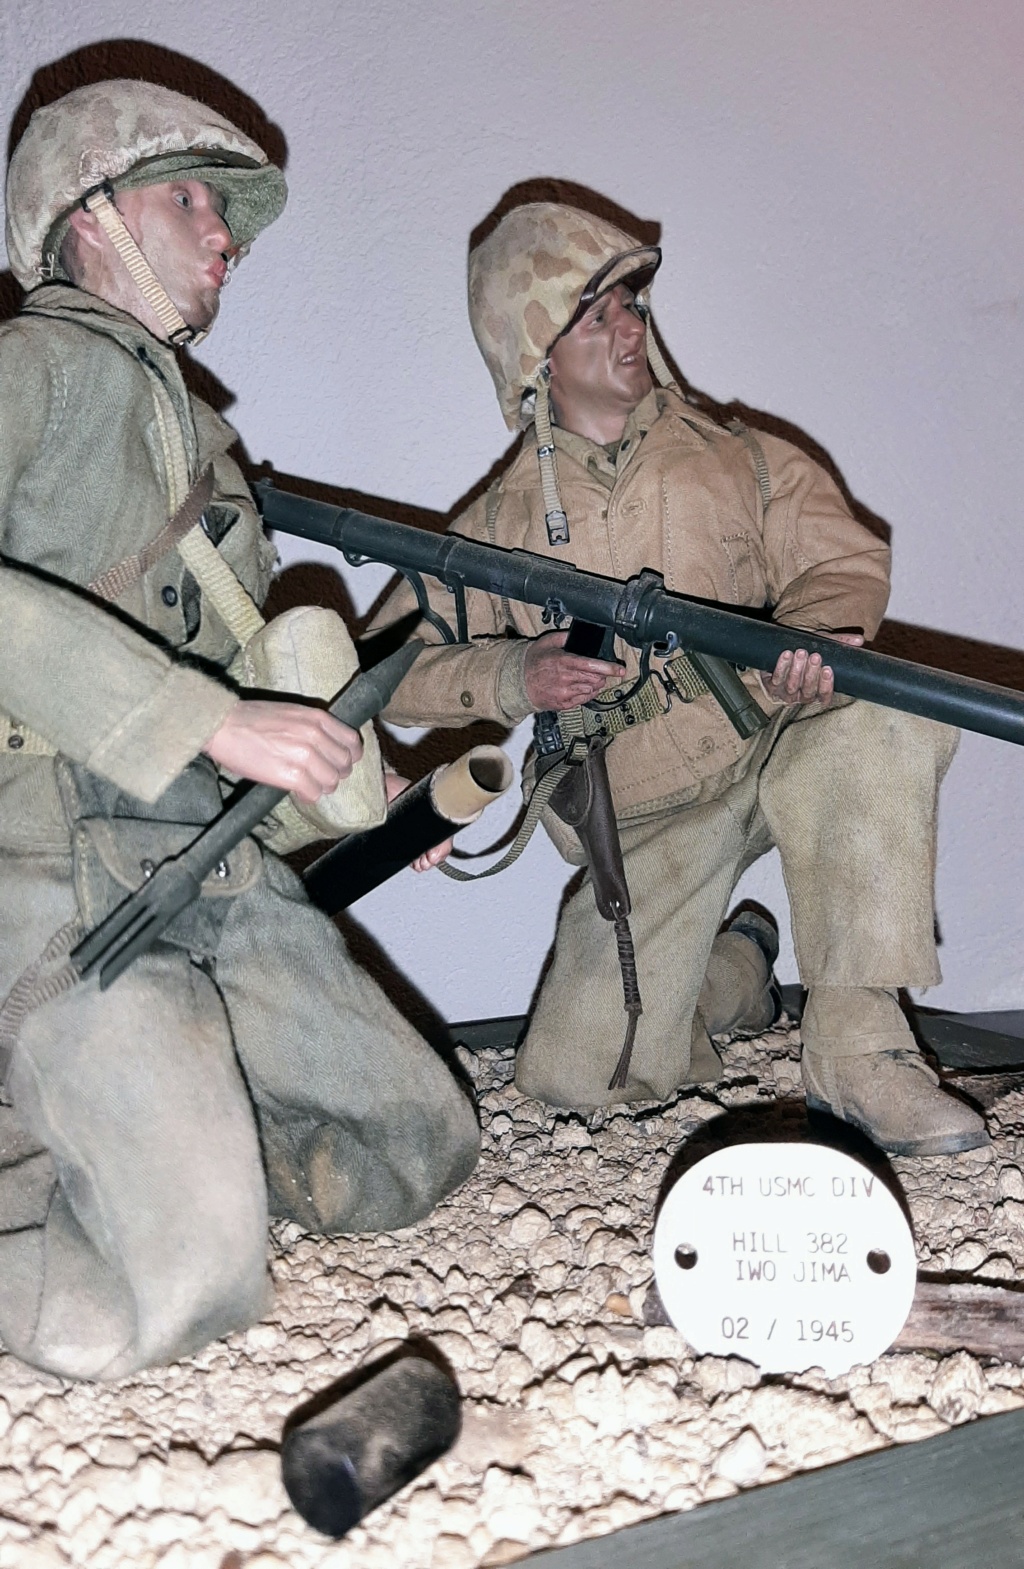 Bazooka team IWO JIMA fevrier 1945 20201031